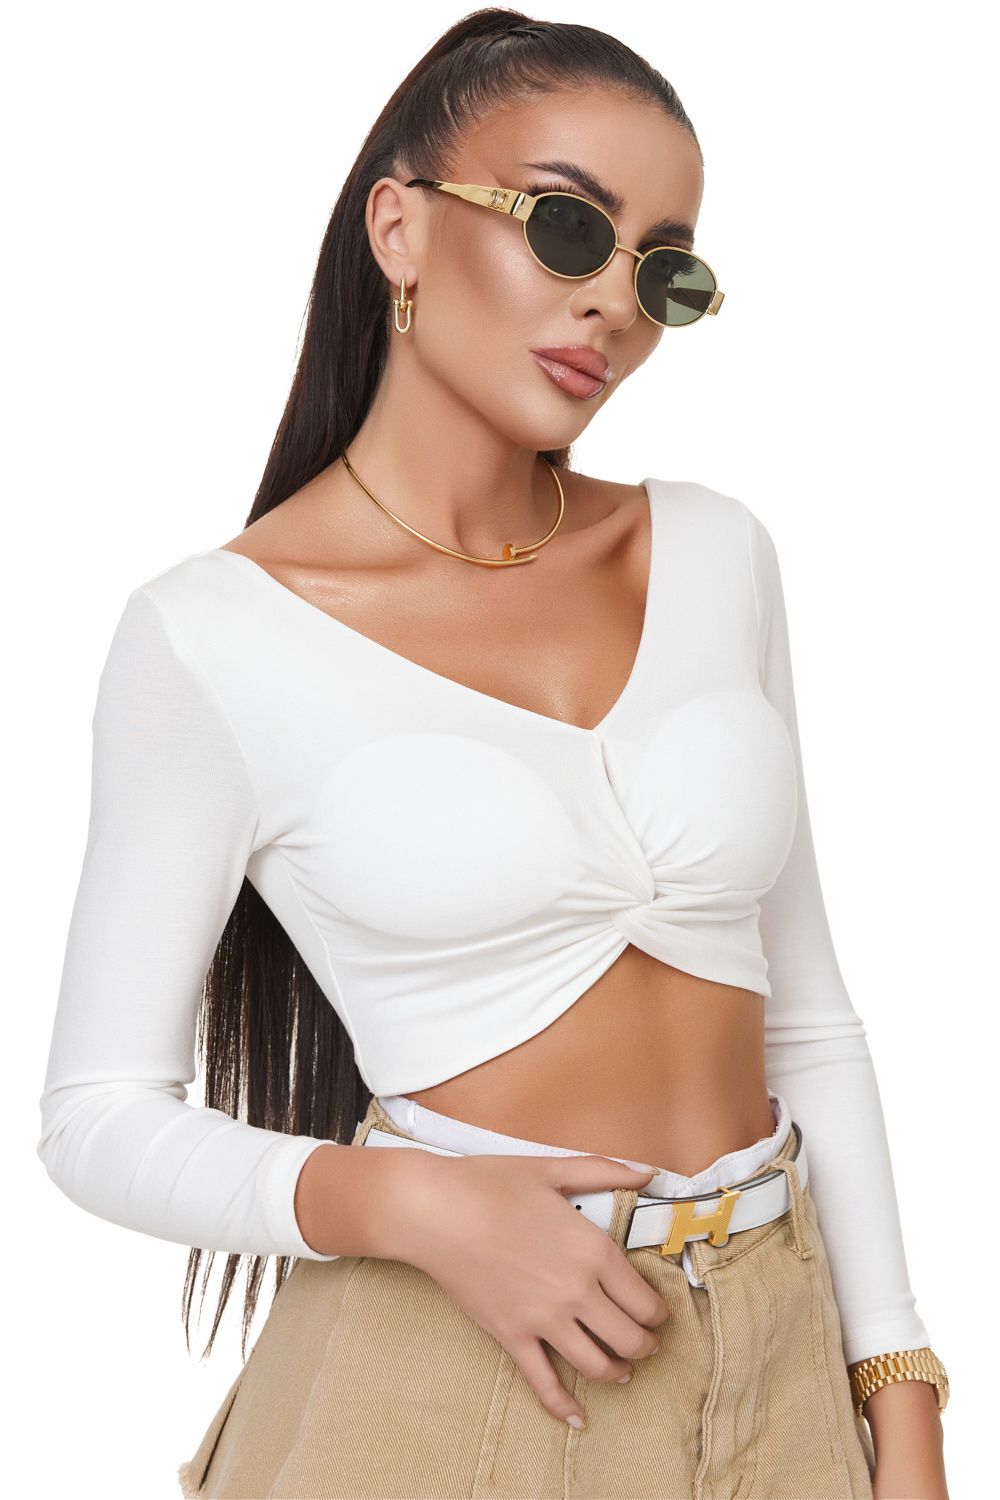 Tenisa Bogas casual white blouse for women